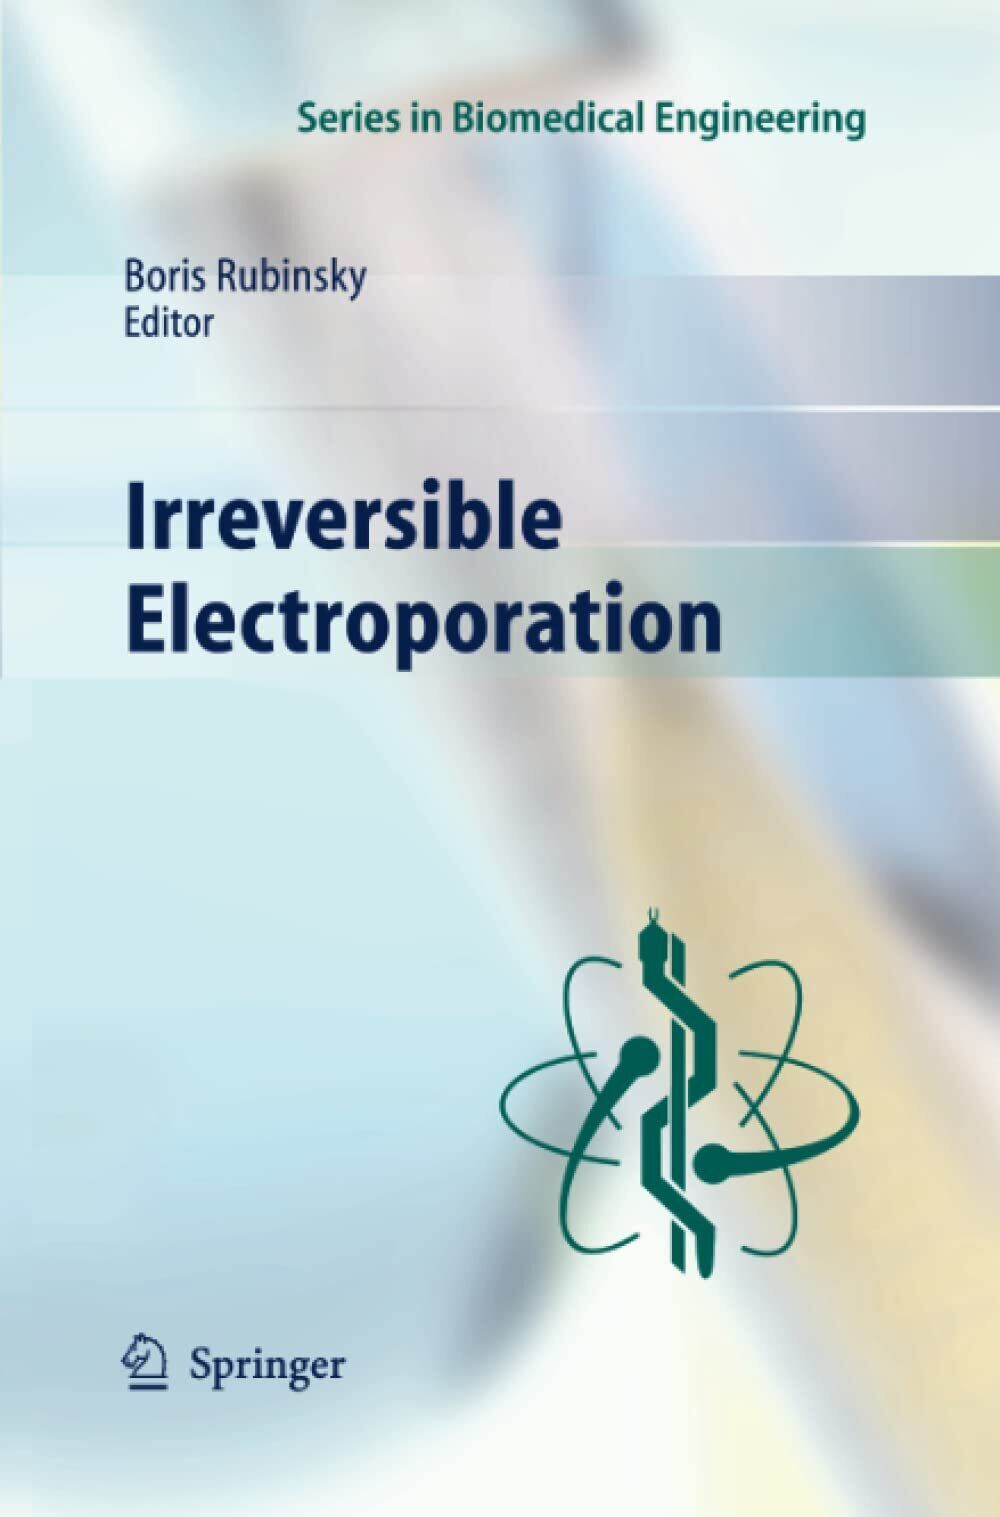 Irreversible Electroporation - Boris Rubinsky - Springer, 2012